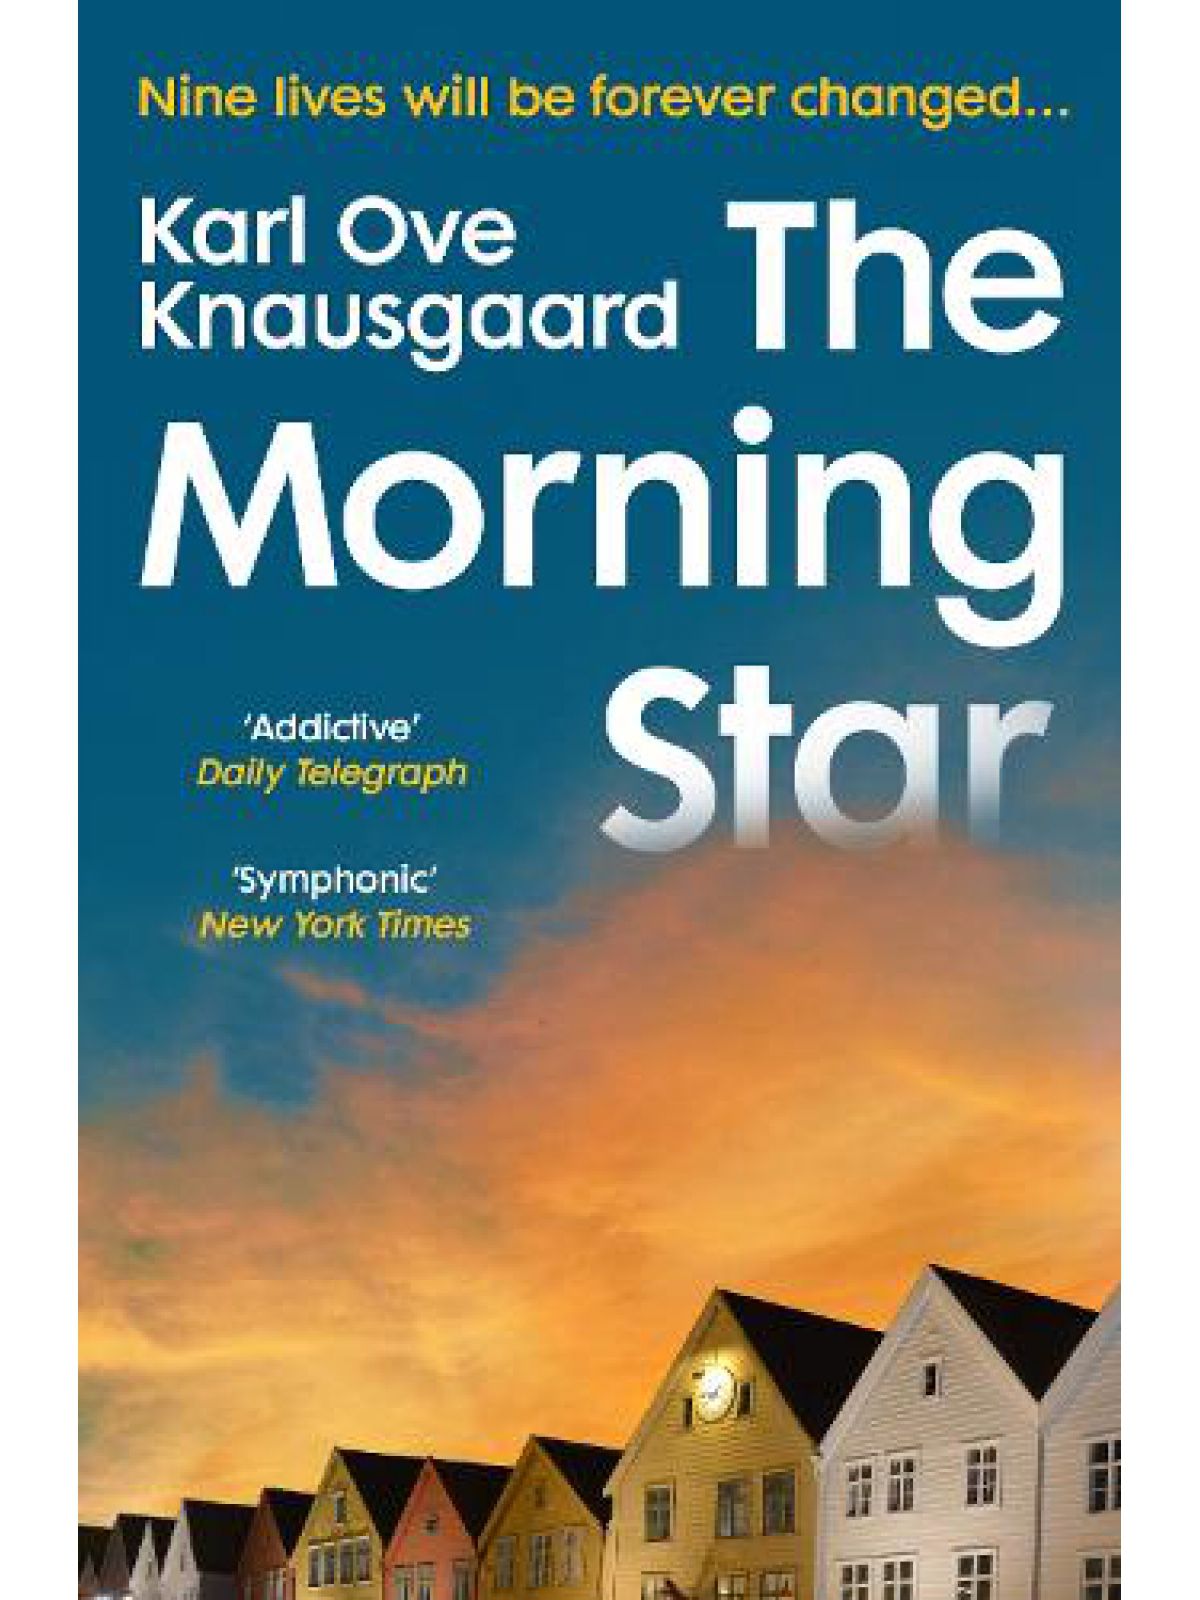 MORNING STAR KNAUSGAARD, KARL OVE Купить Книгу на Английском